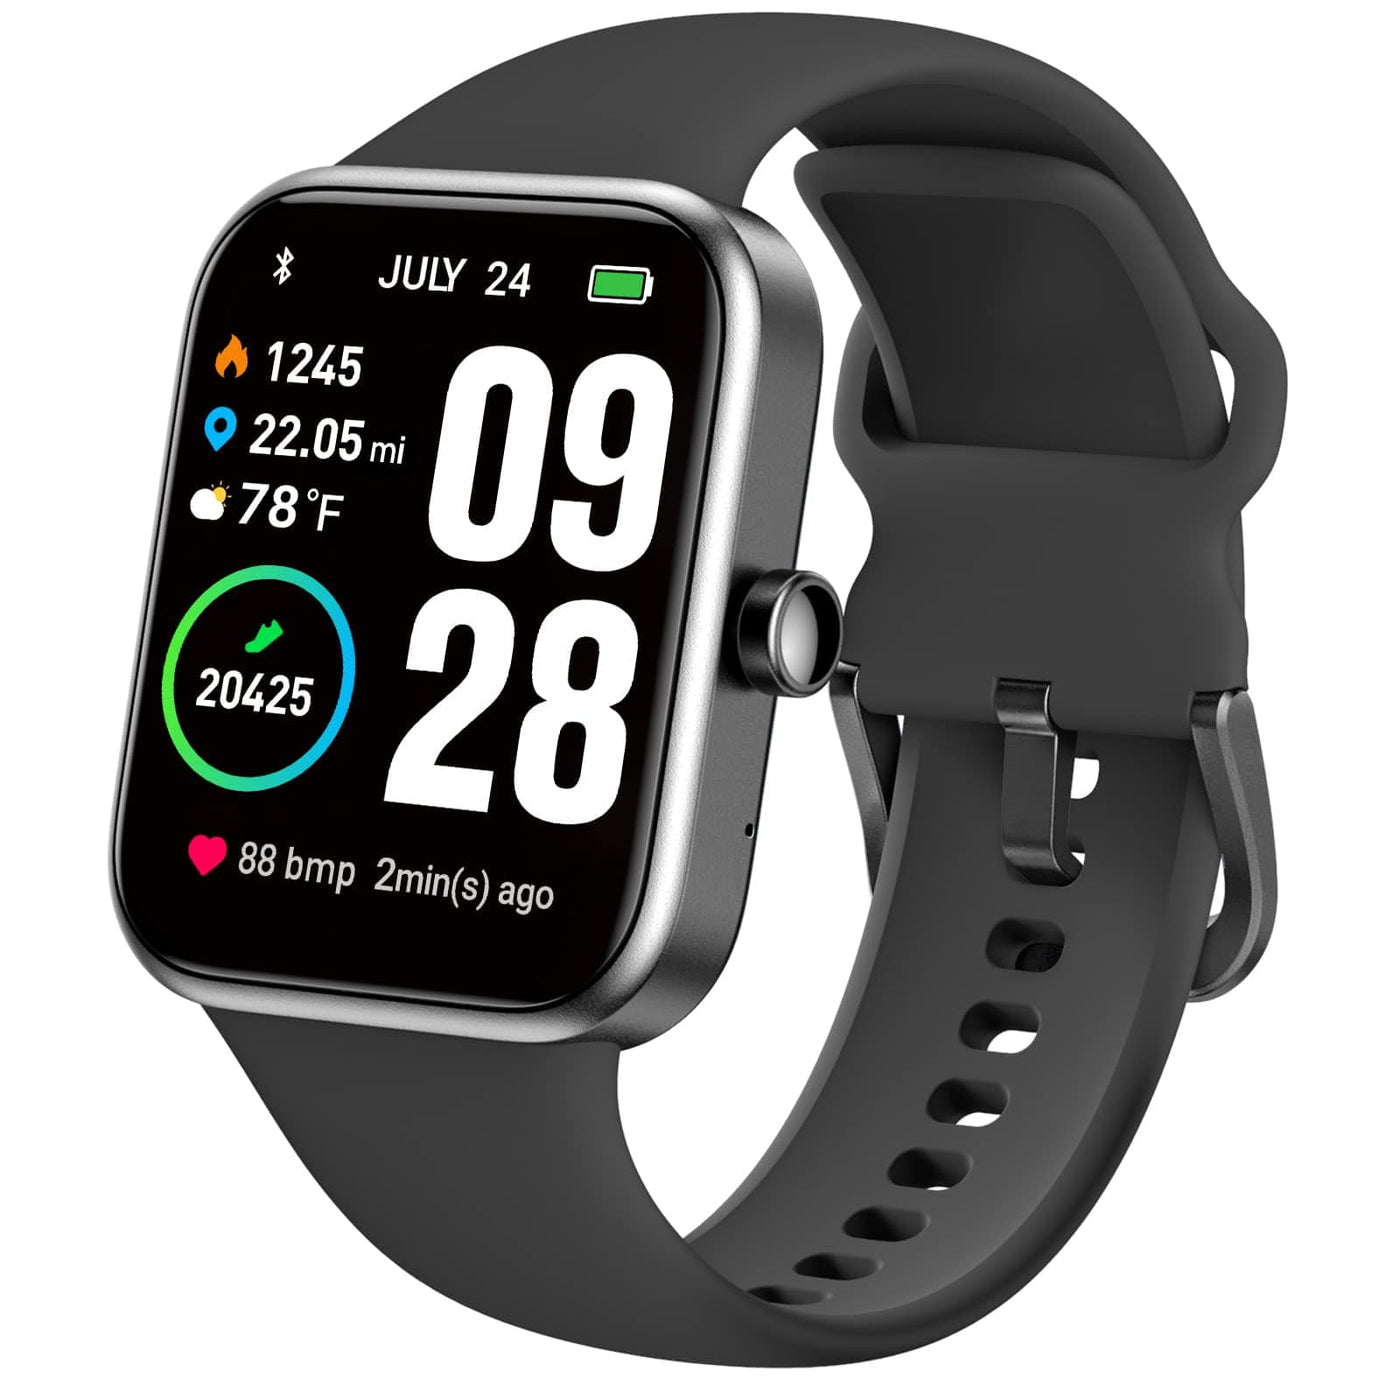 TOZO S2 44mm Smart Watch Alexa Built-in Fitness Tracker - Smart Tech Shopping